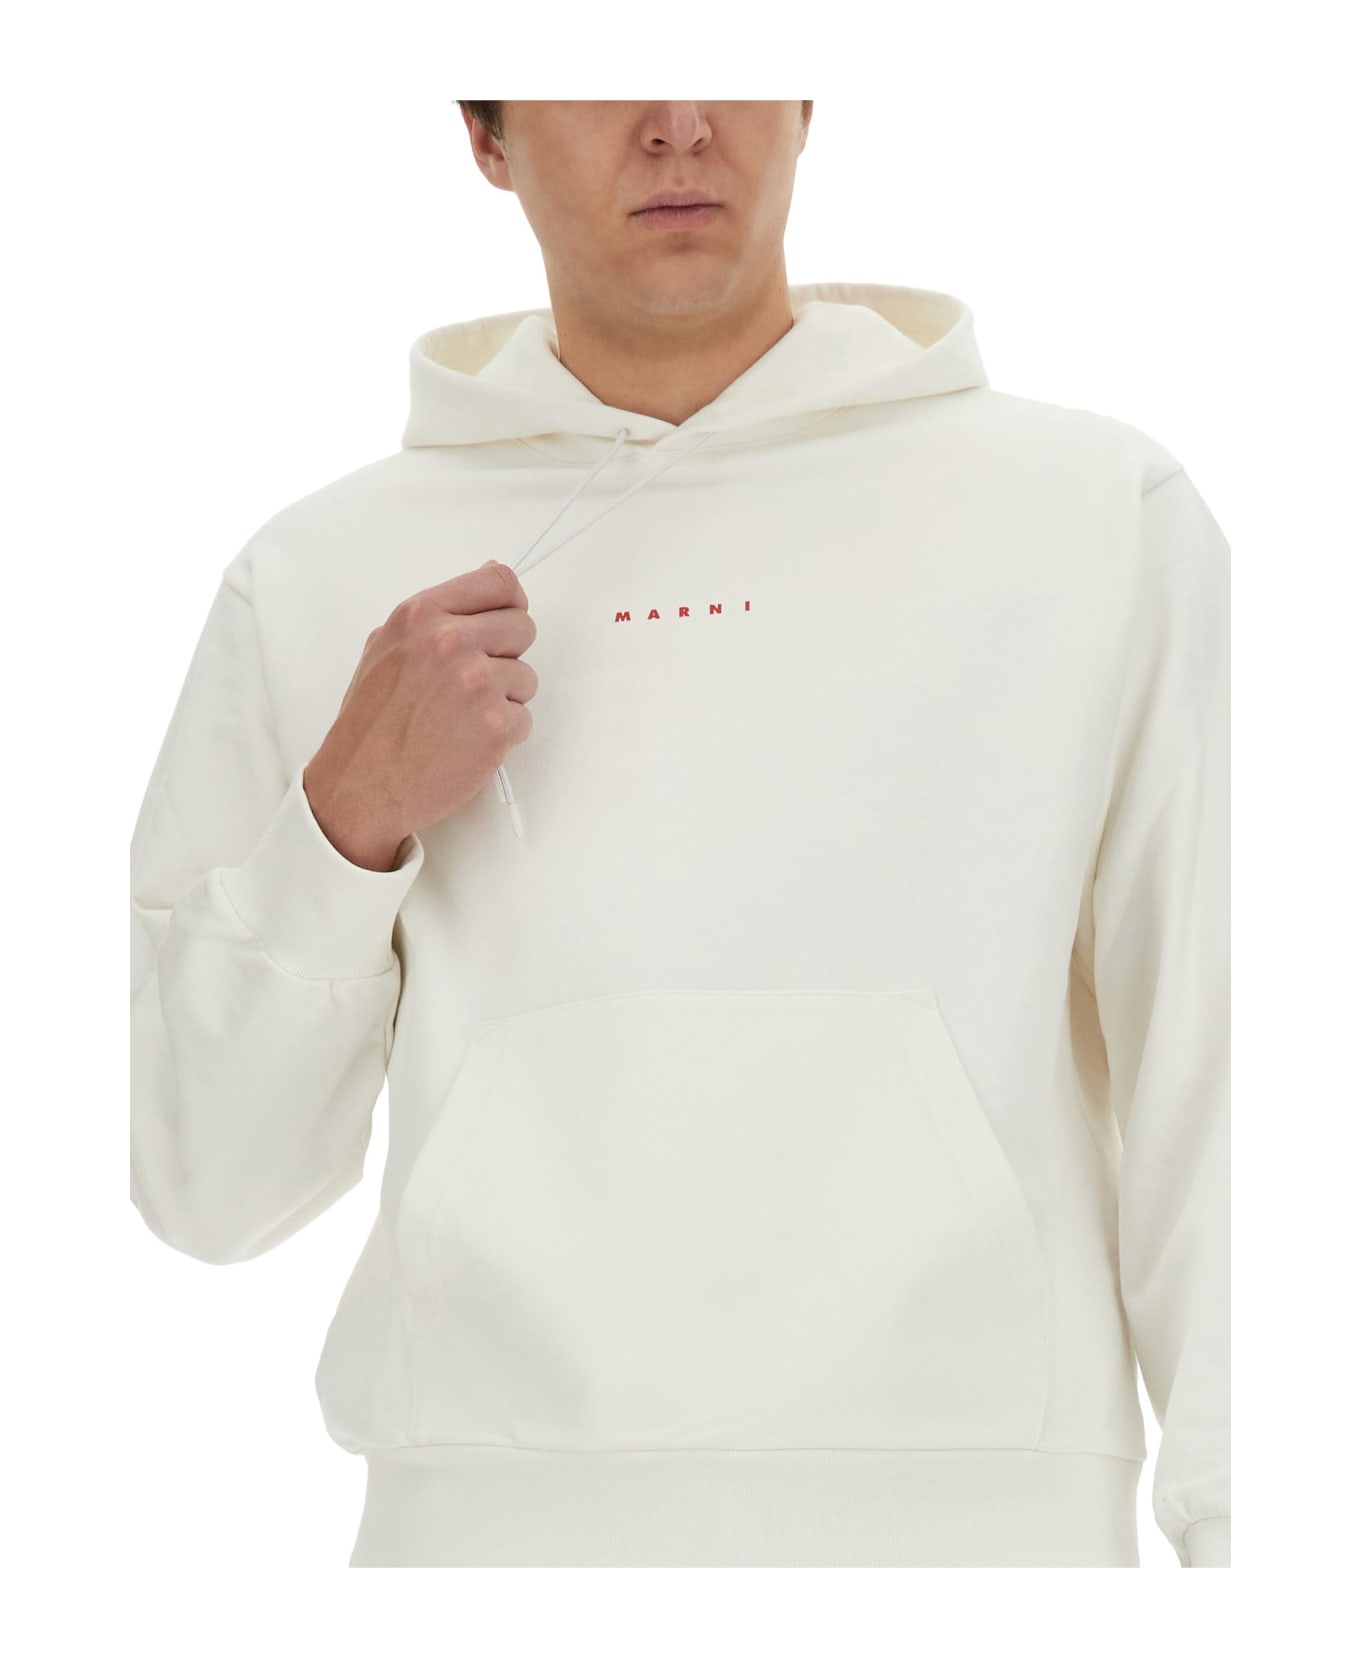 Marni Sweatshirt With Logo - BIANCO